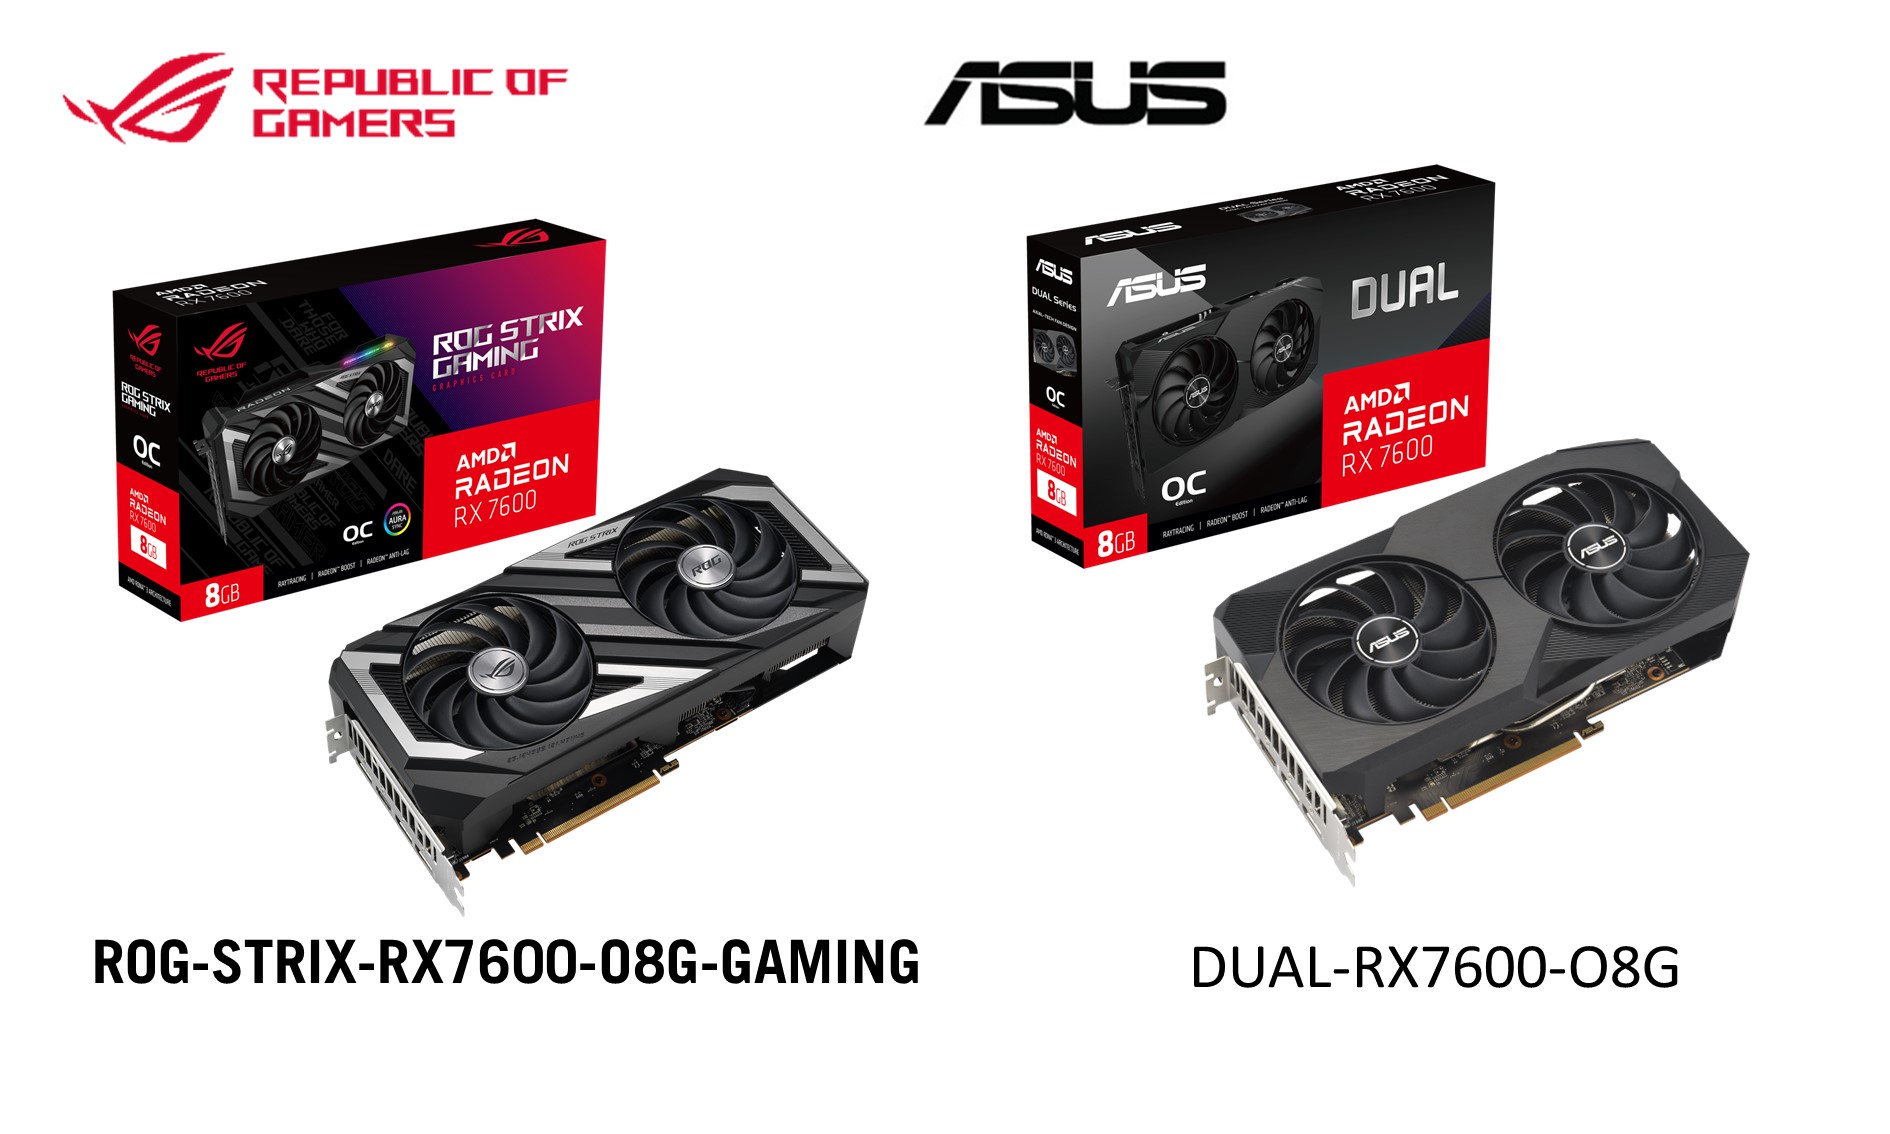 ASUS ROG Strix AMD Radeon RX 5600 XT OCエディション ゲーミング